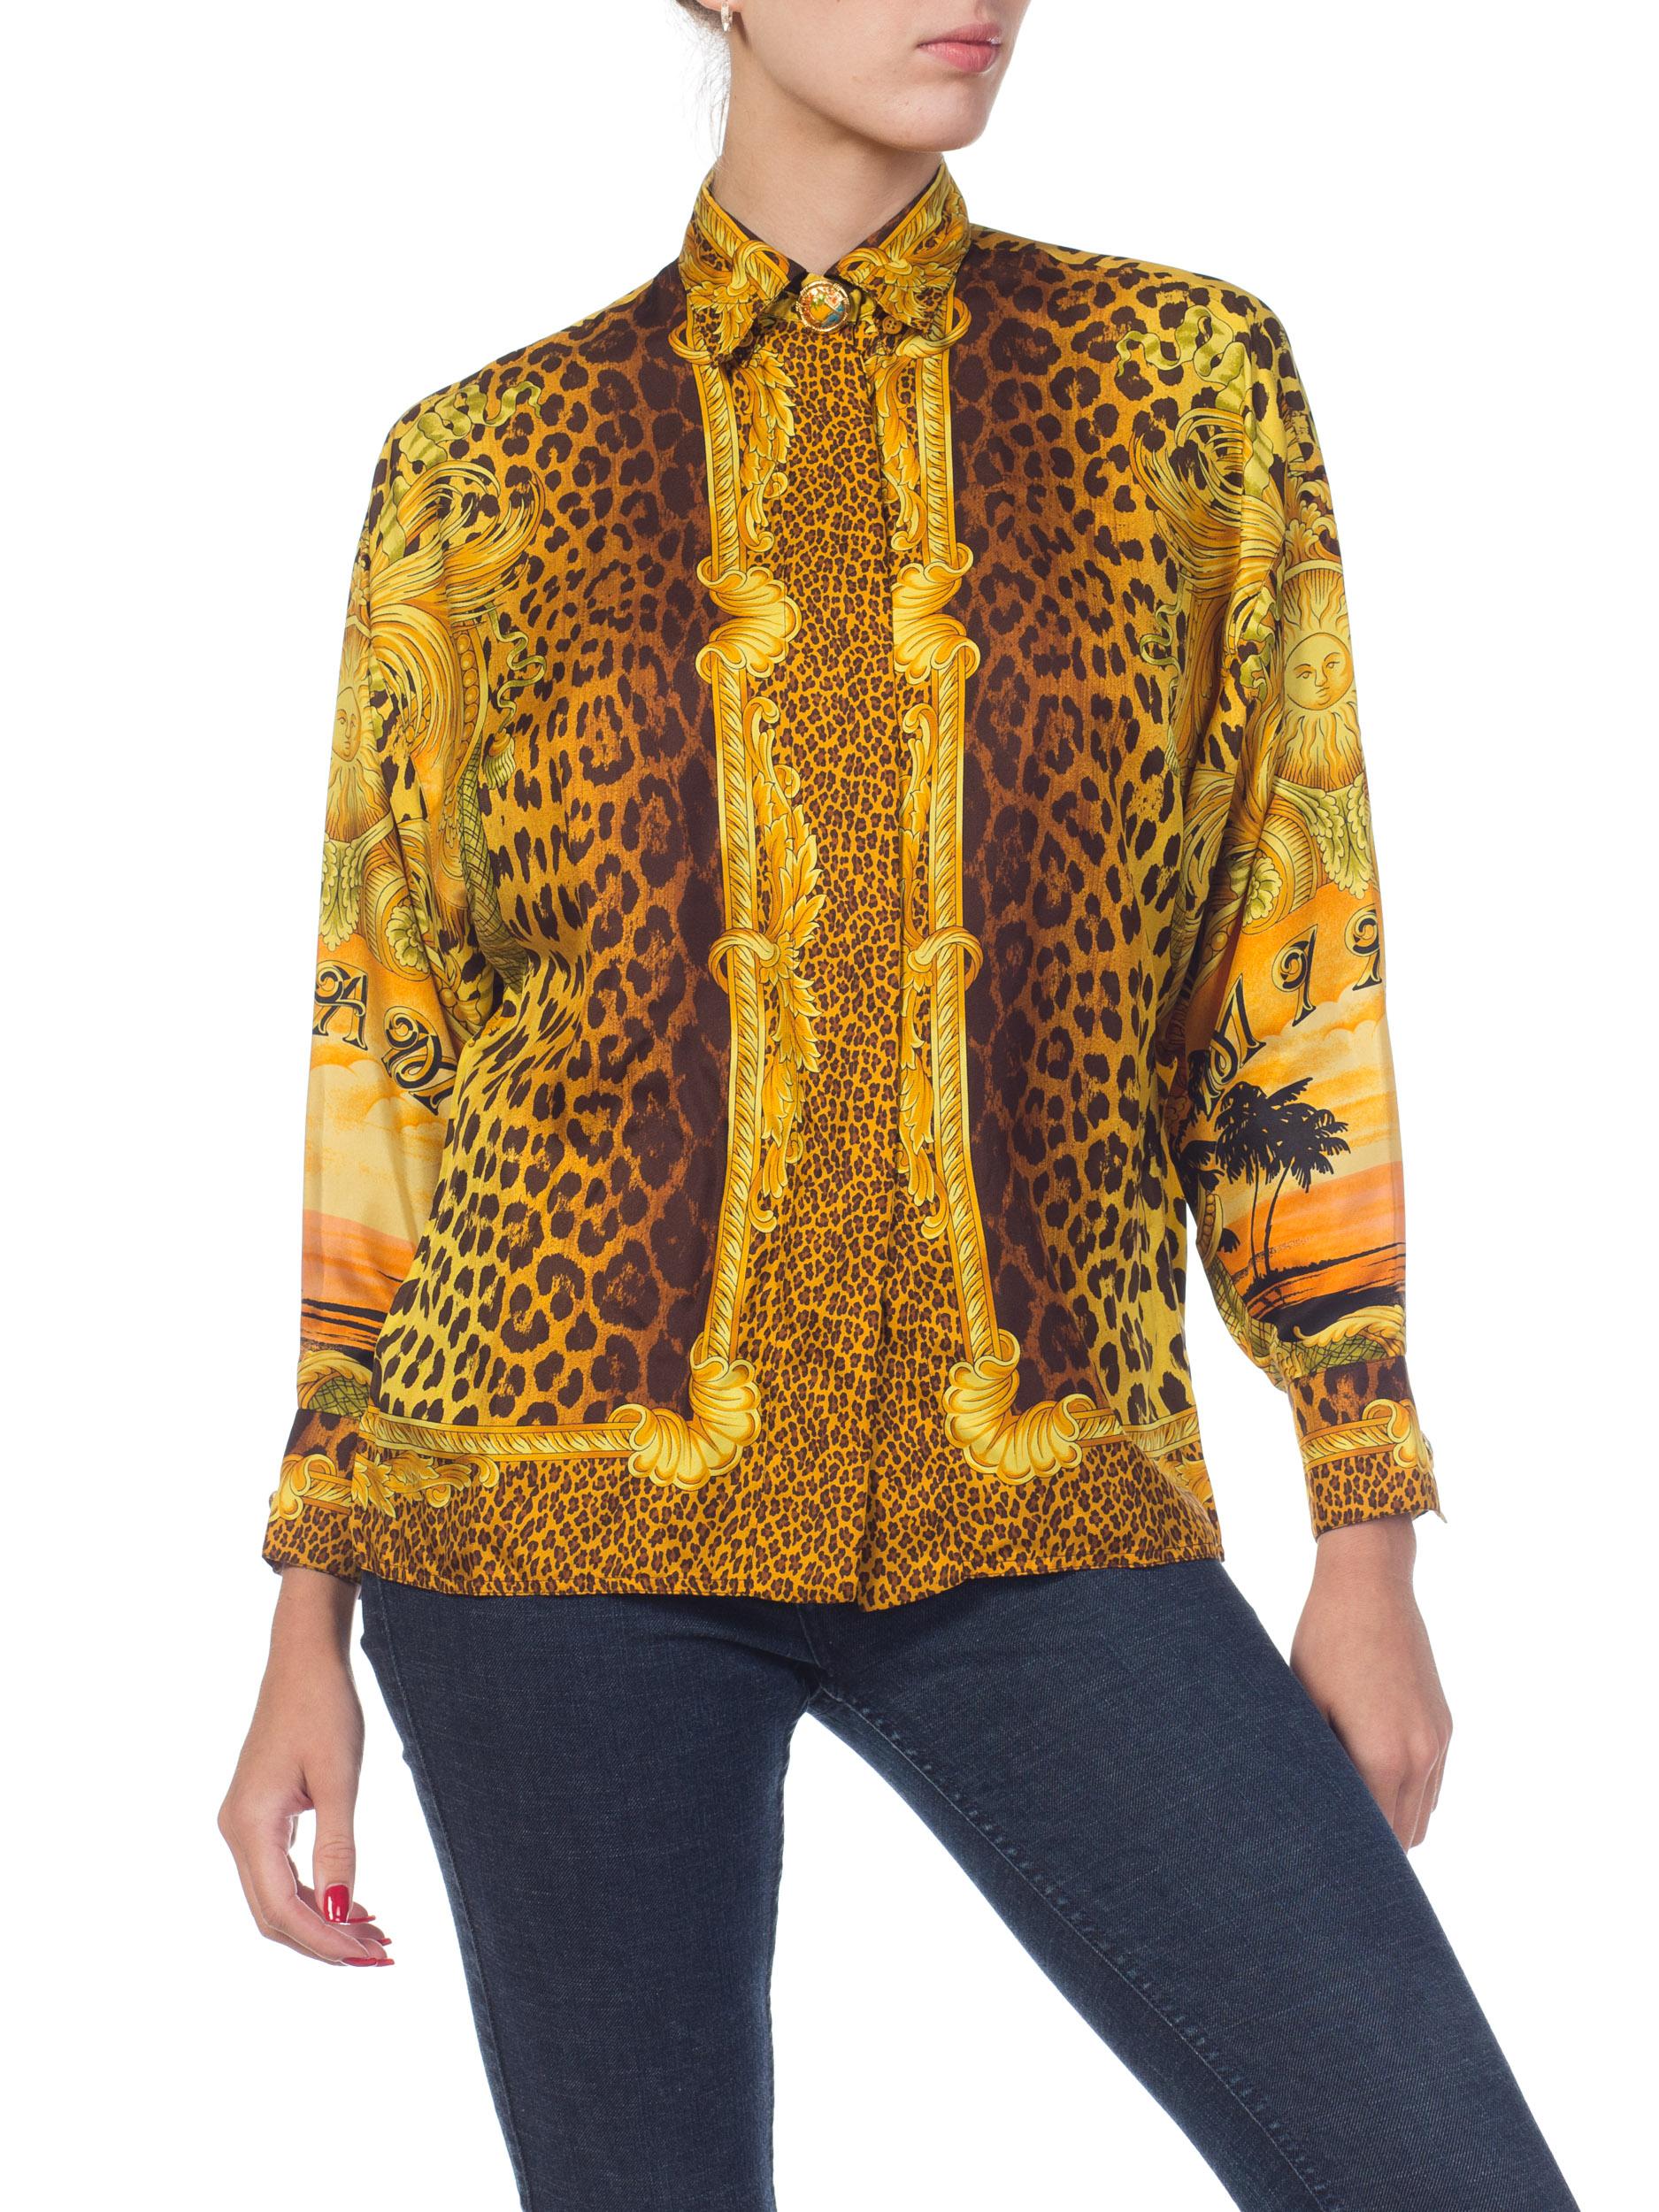 Women's 1990s Gianni Versace Miami Baroque Leopard Silk Blouse